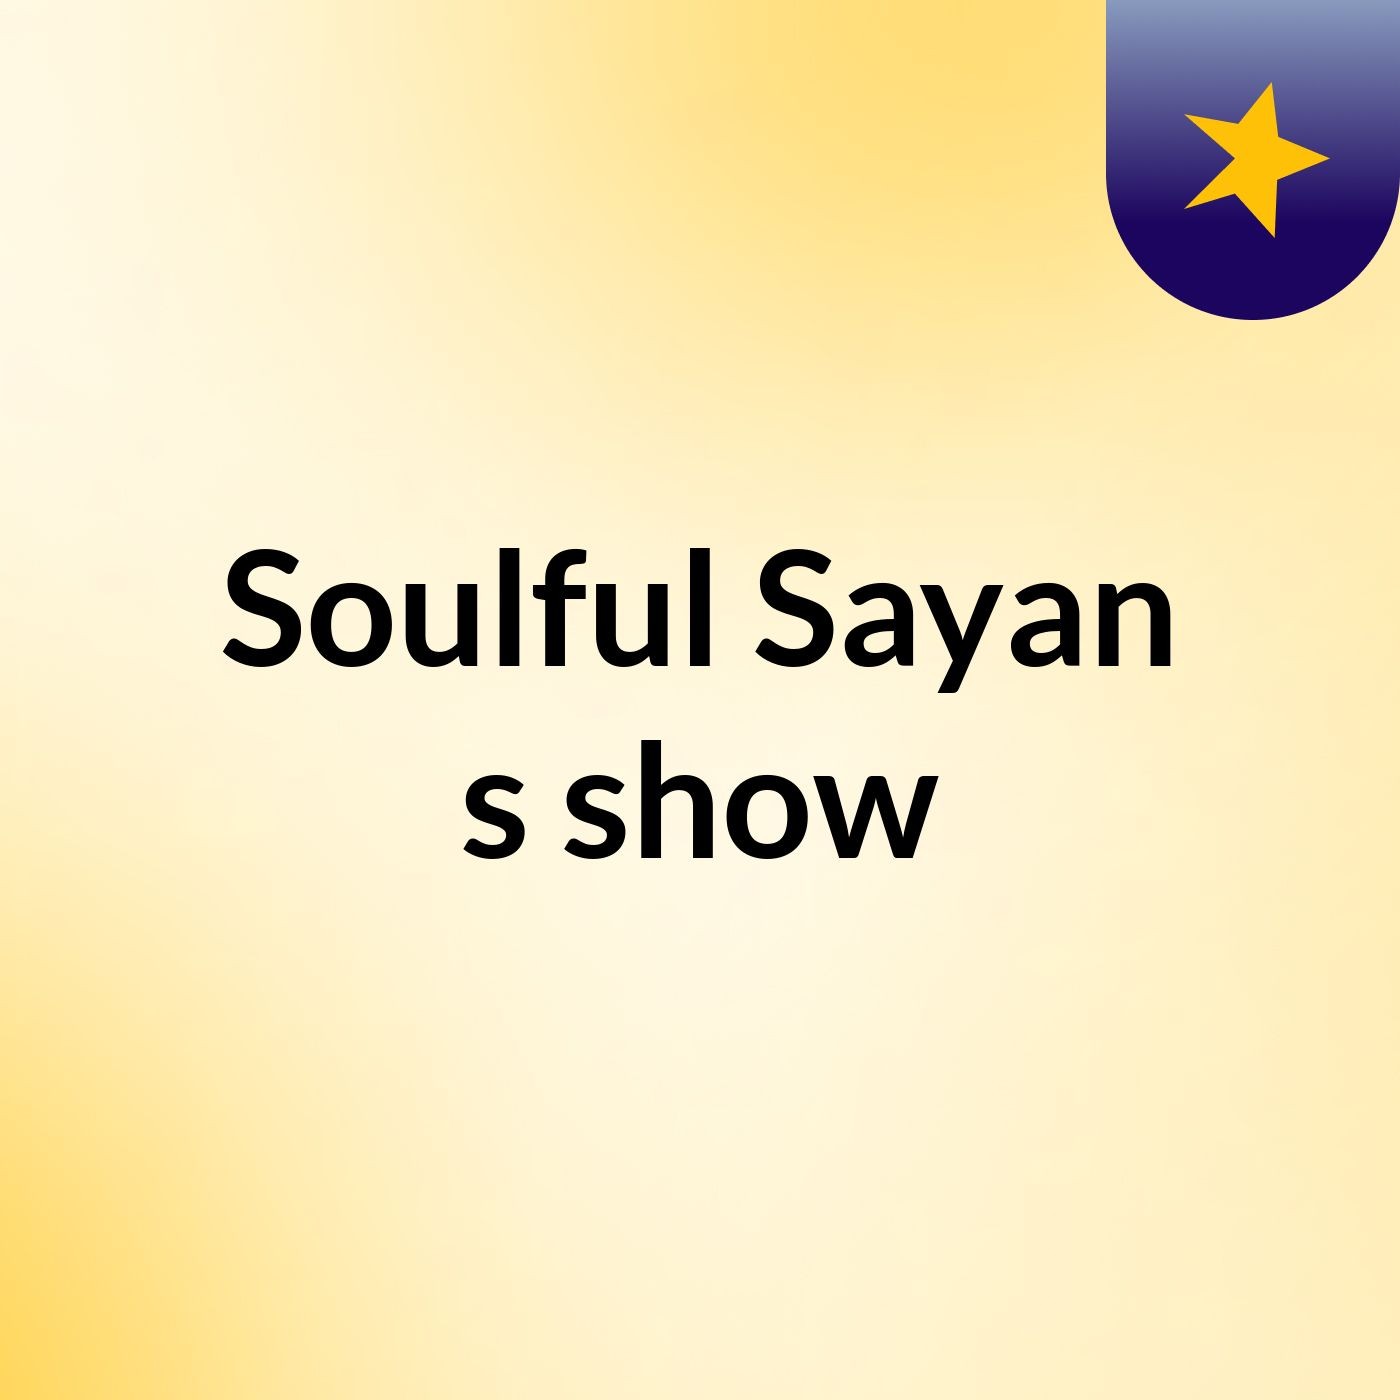 Soulful Sayan's show